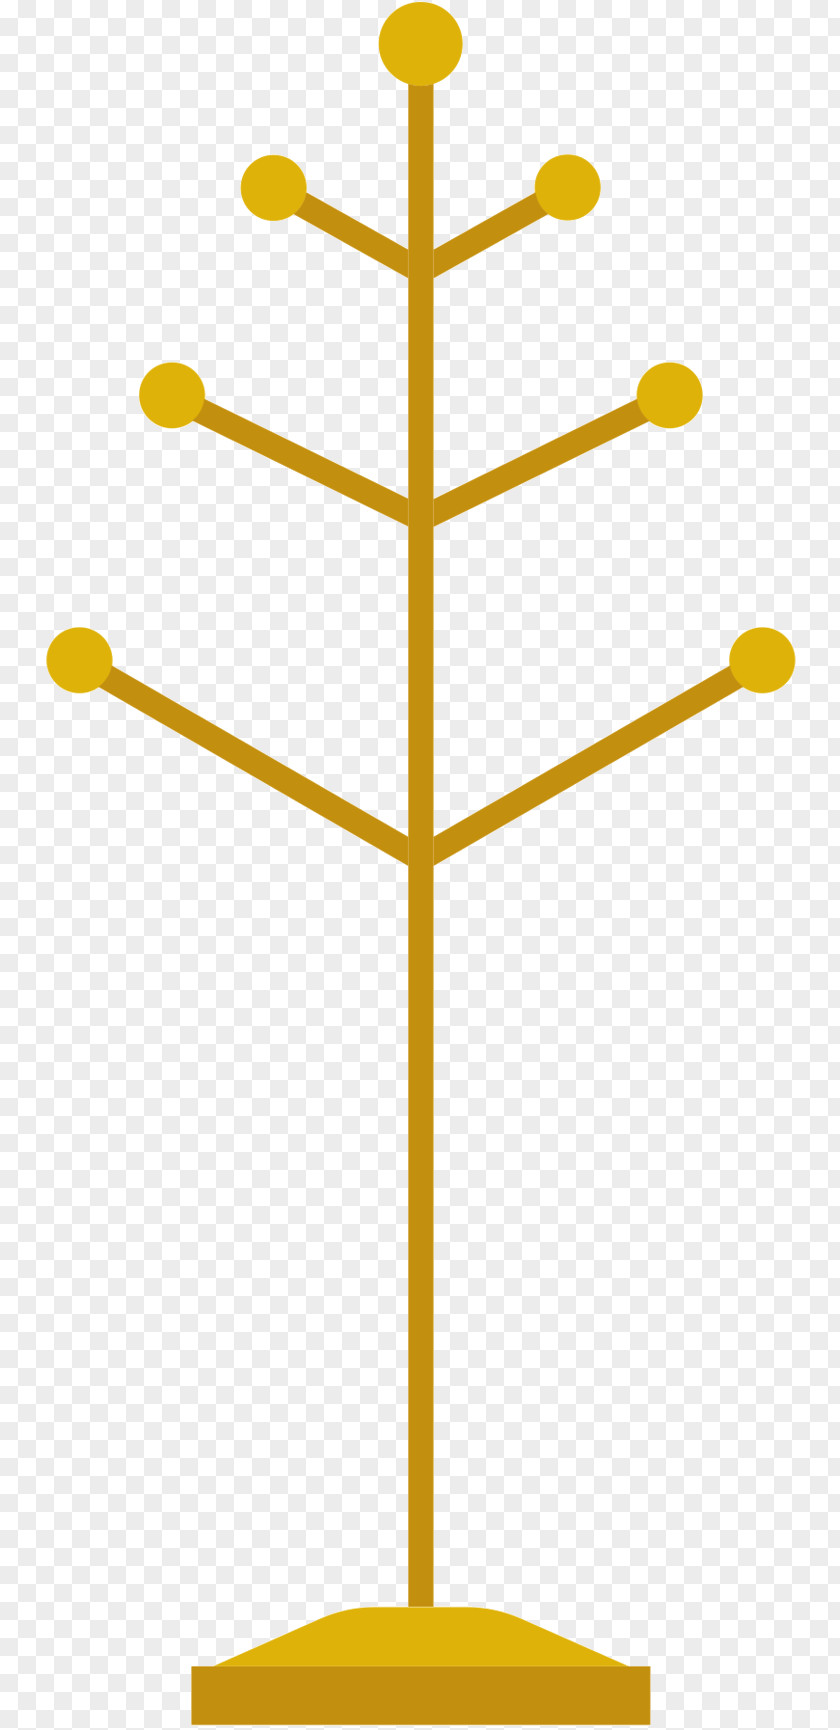 Product Design Line Angle Tree PNG